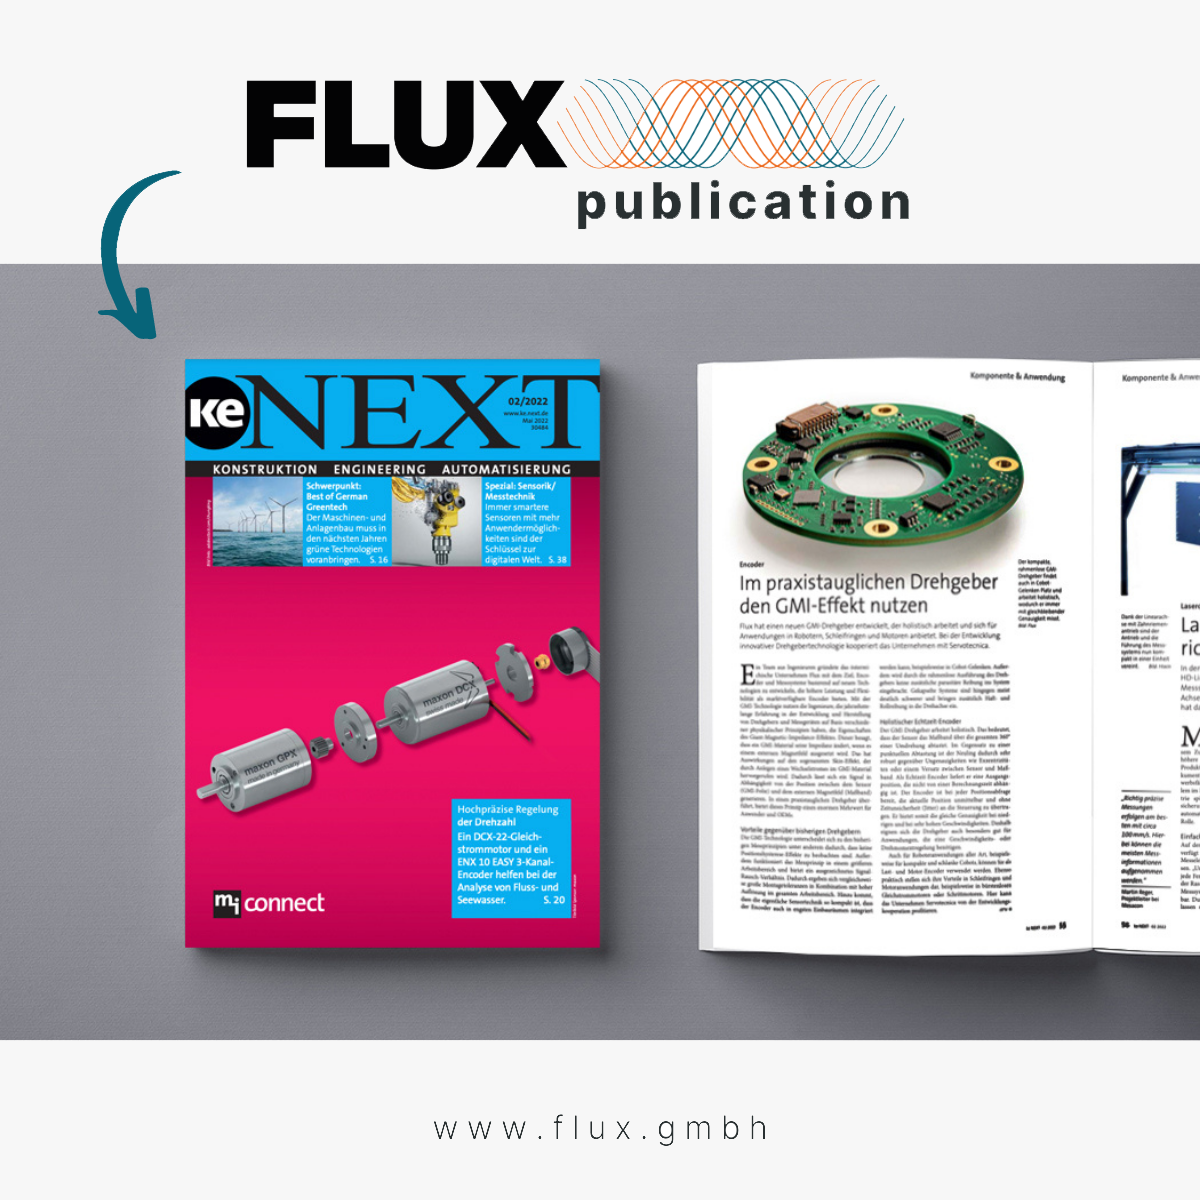 ke NEXT Fachmagazin presents FLUX GMI Technology